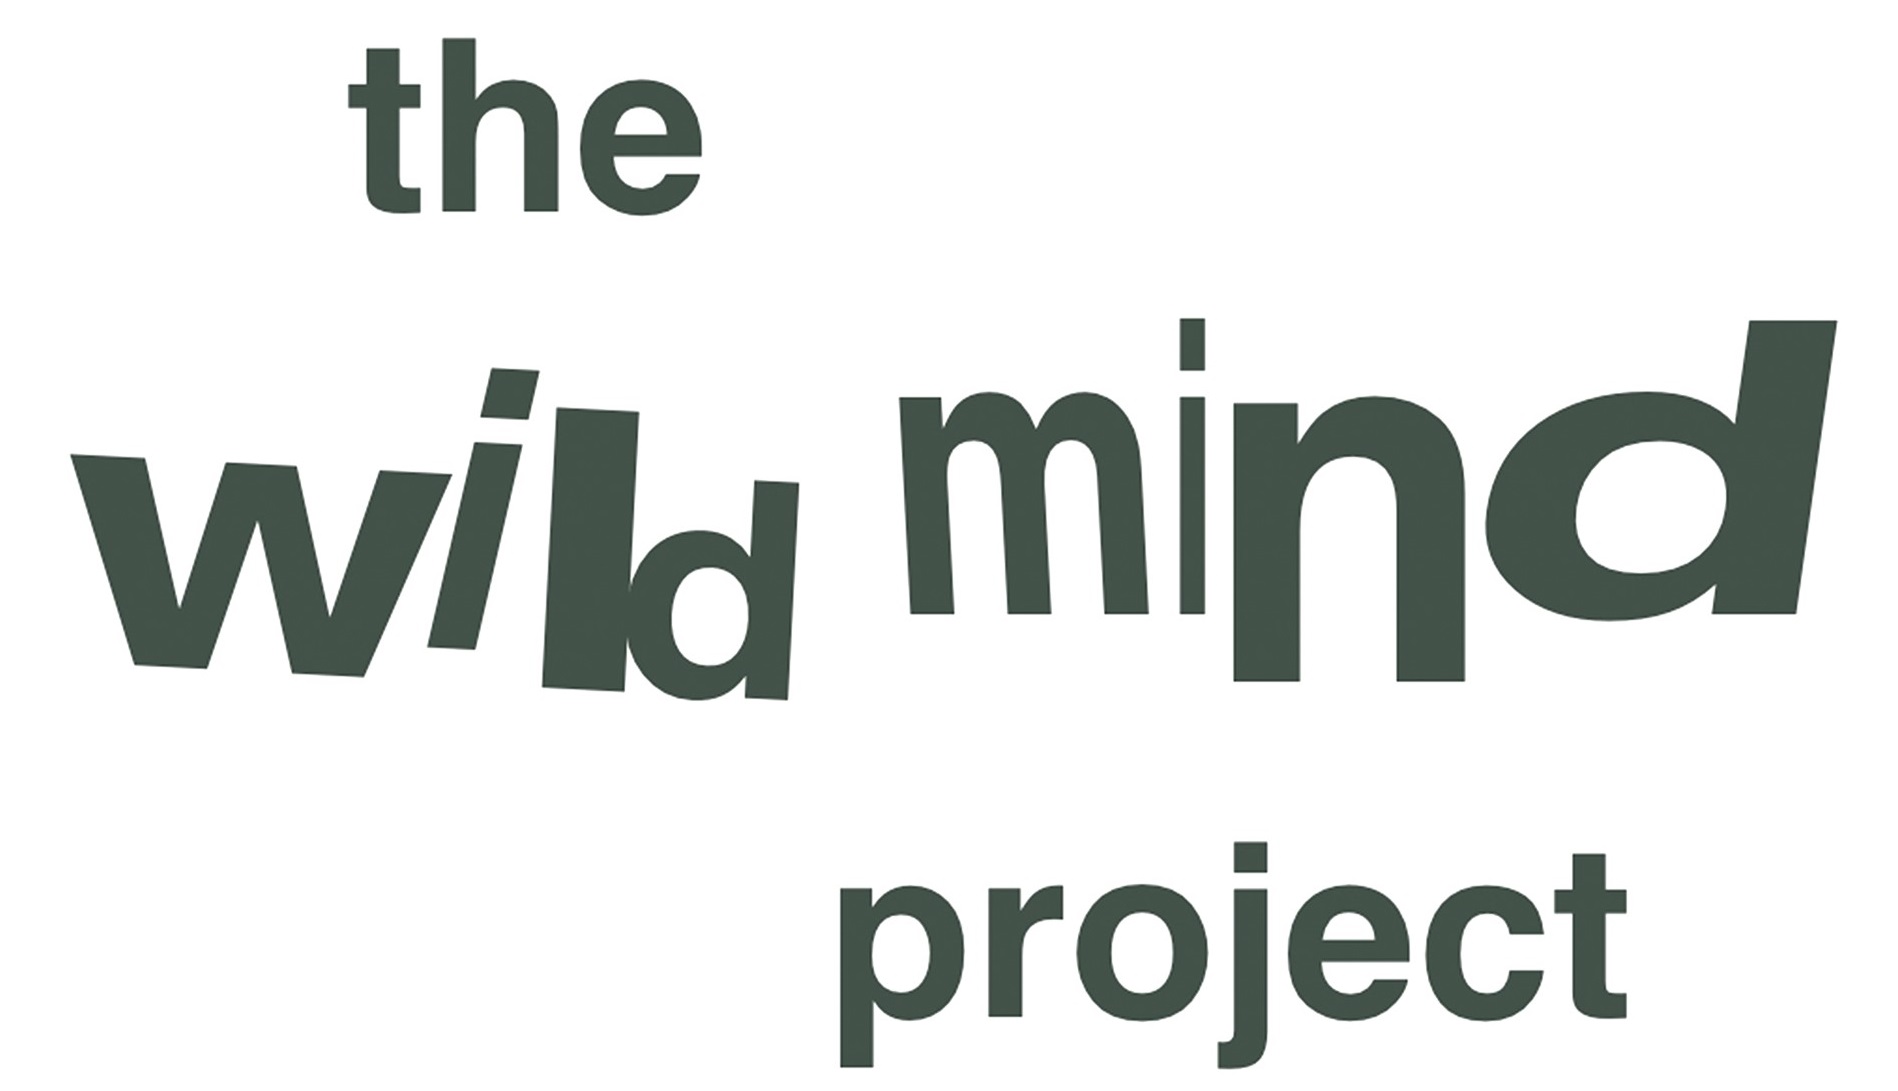 Wild mind project logo